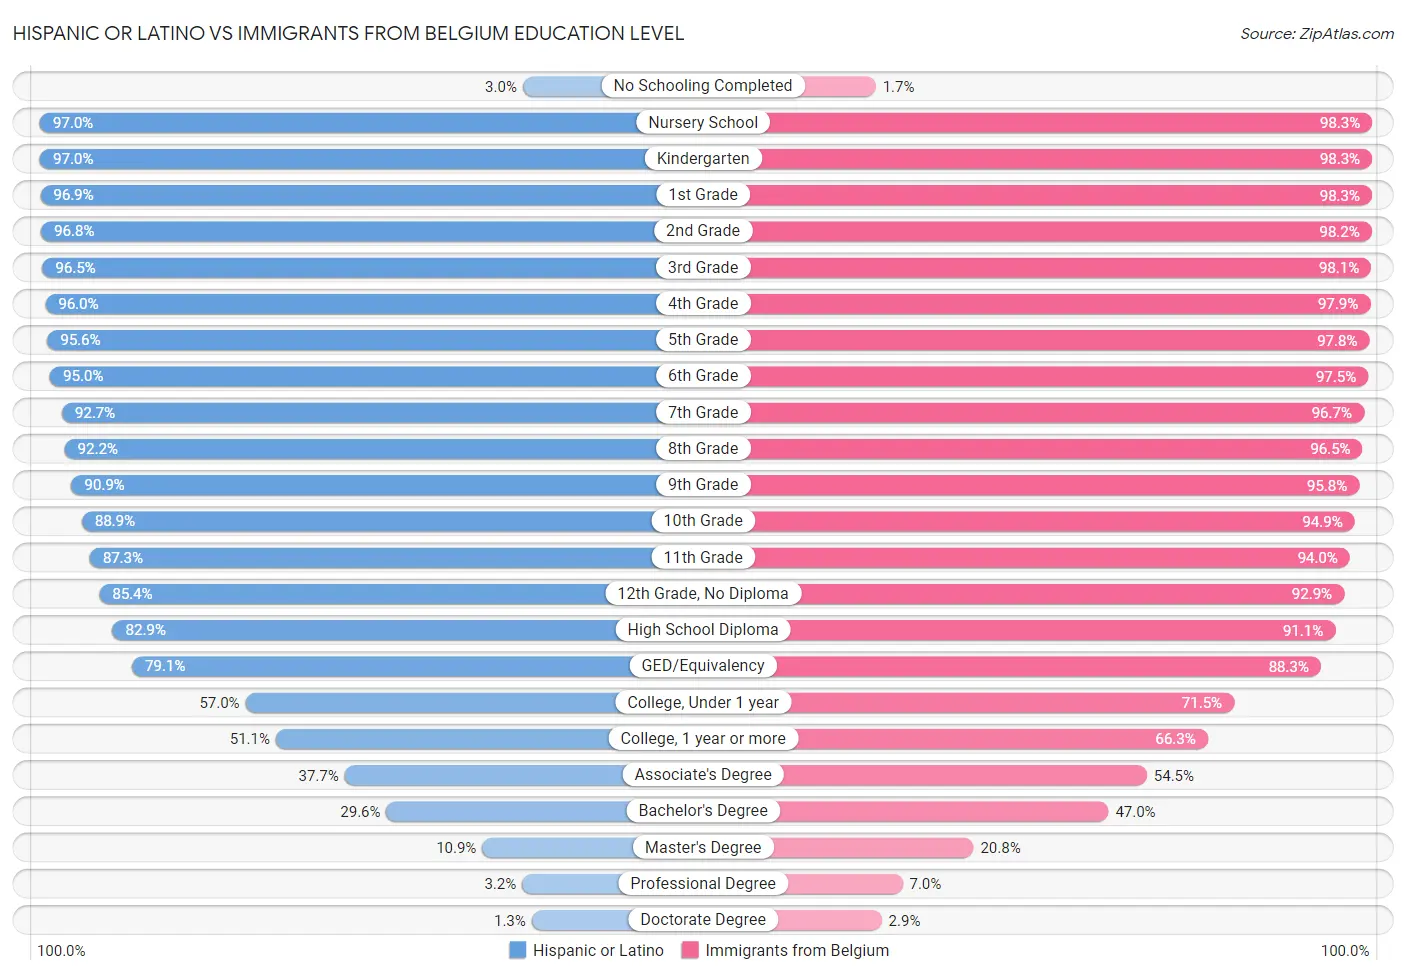 Hispanic or Latino vs Immigrants from Belgium Education Level